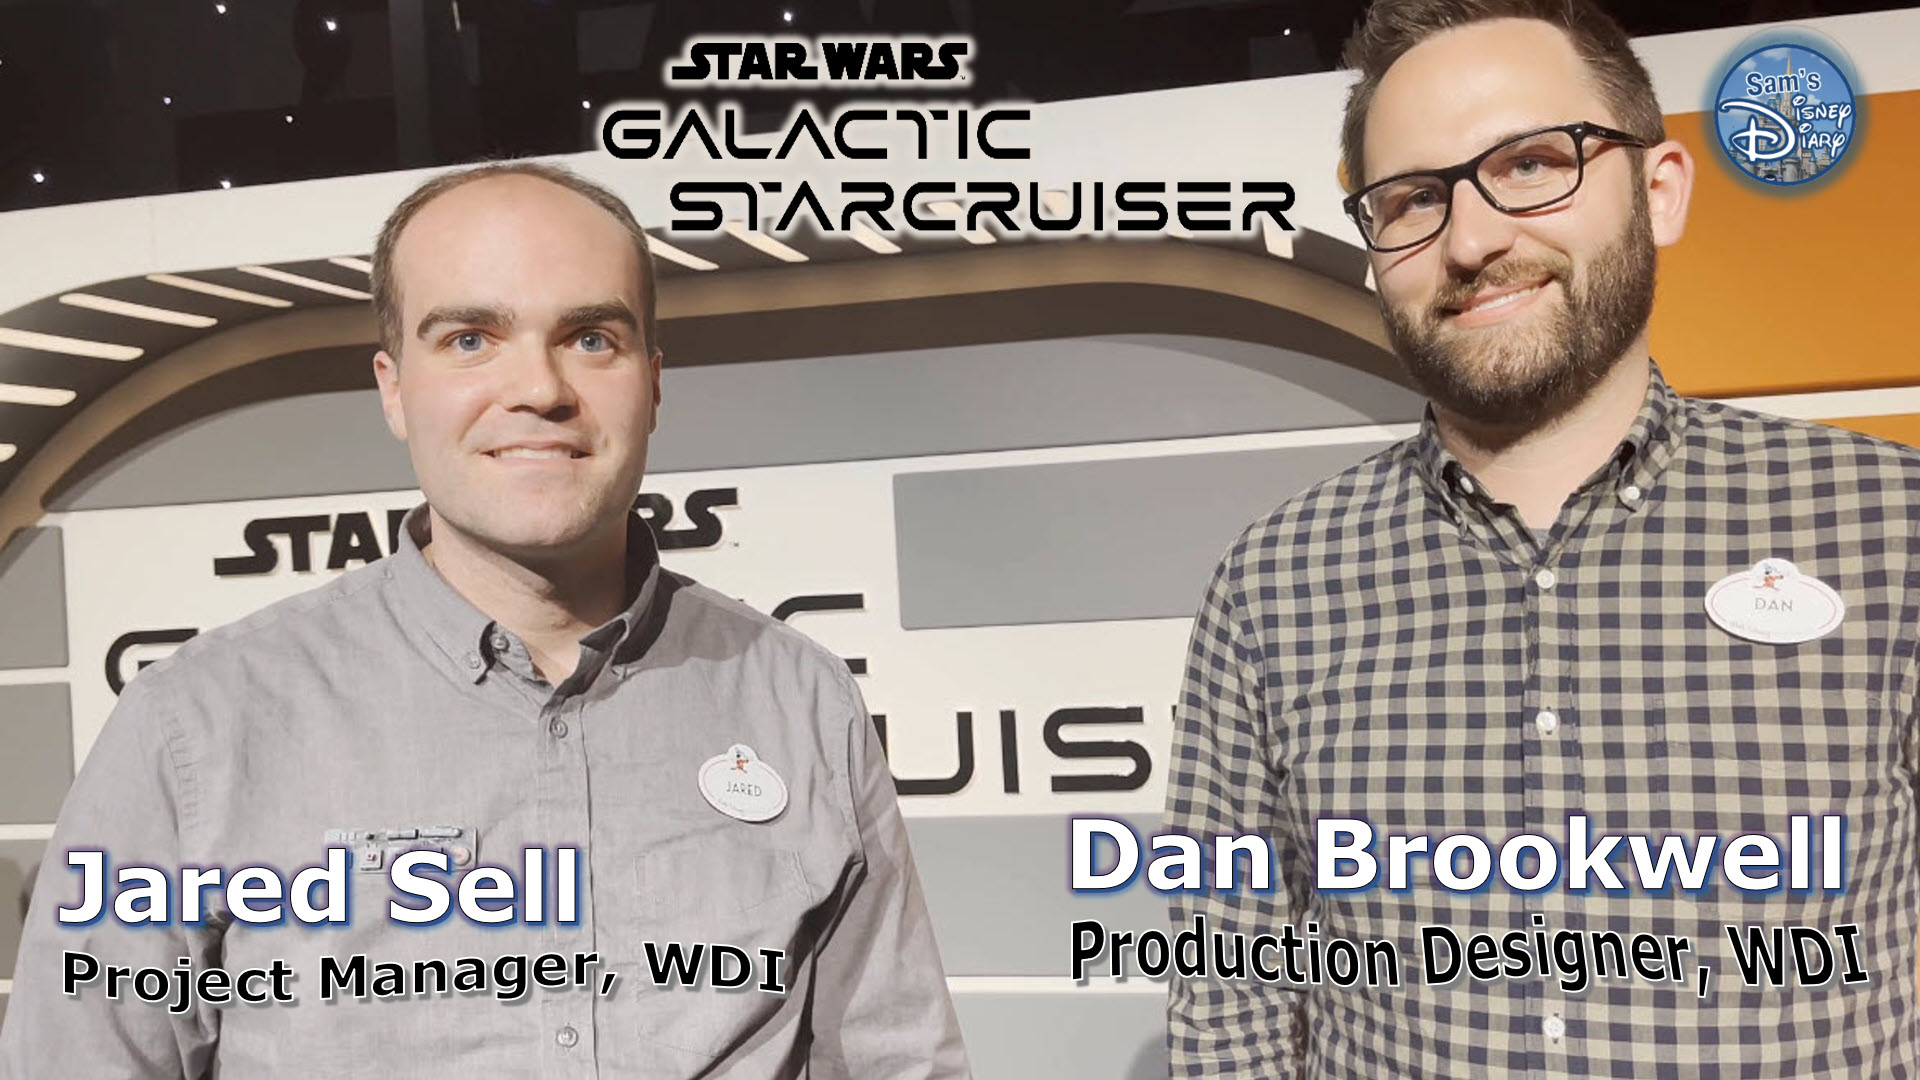 Star Wars Galactic Starcruiser | Star Wars Galaxy's Edge | Jared Sell | Dan Brookwell | Disney Hotel